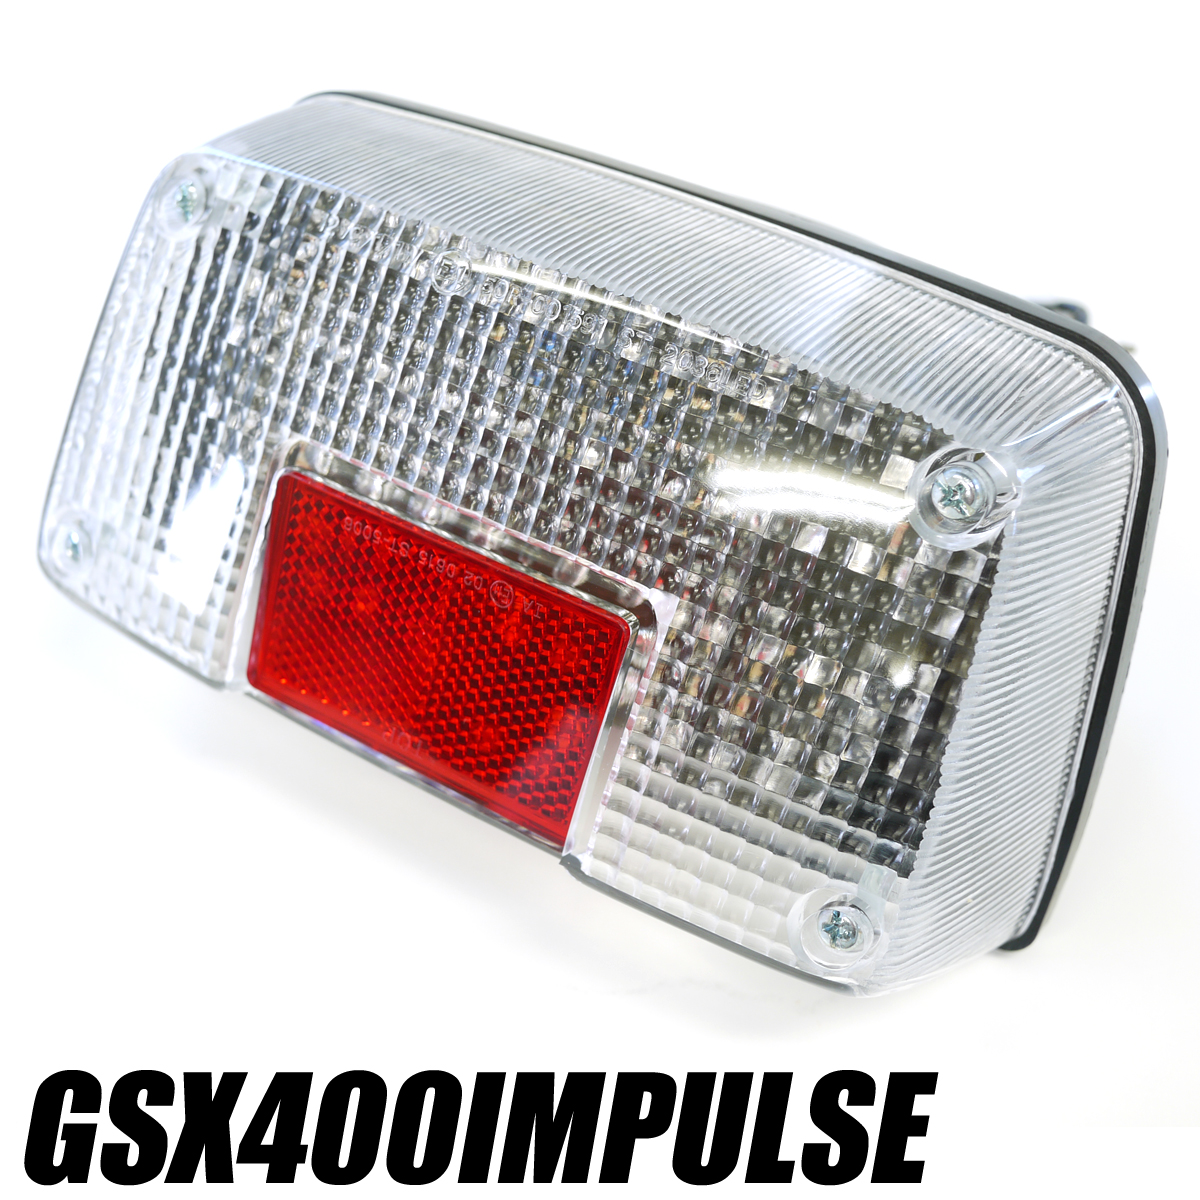 GSX400インパルス用LEDテールランプ クリアGK79A GK7CA IMPULSE ポン付けLEDテール